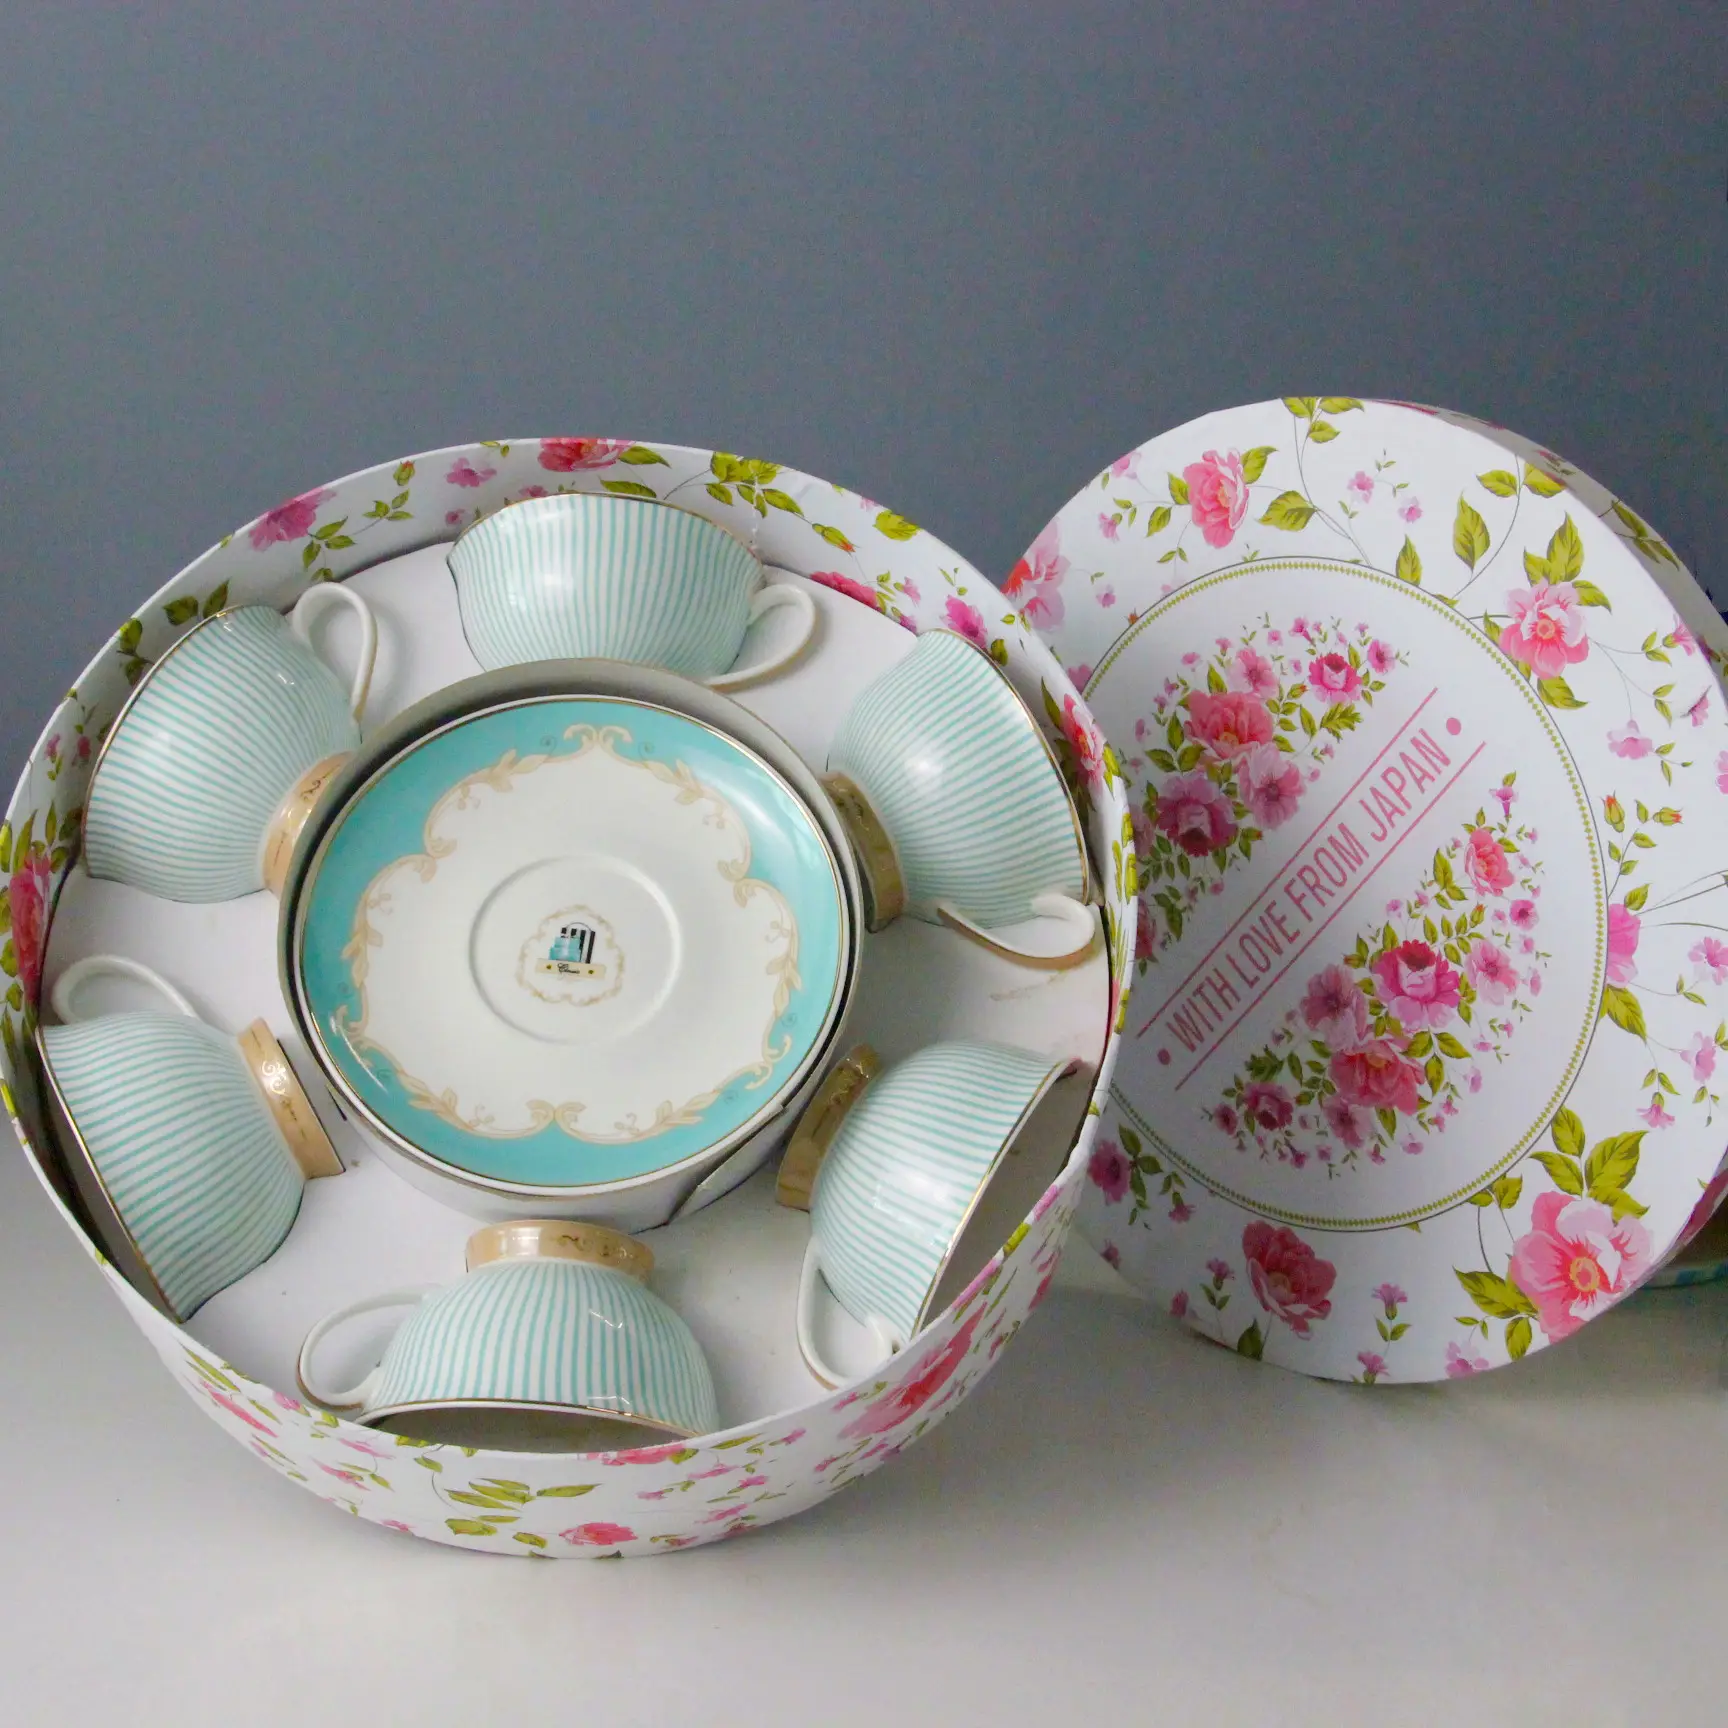 Ceramic Tea cup and saucer set of 6 Floral decal design With Gold rim Inside flower metal stand porcelain tea set For Gift